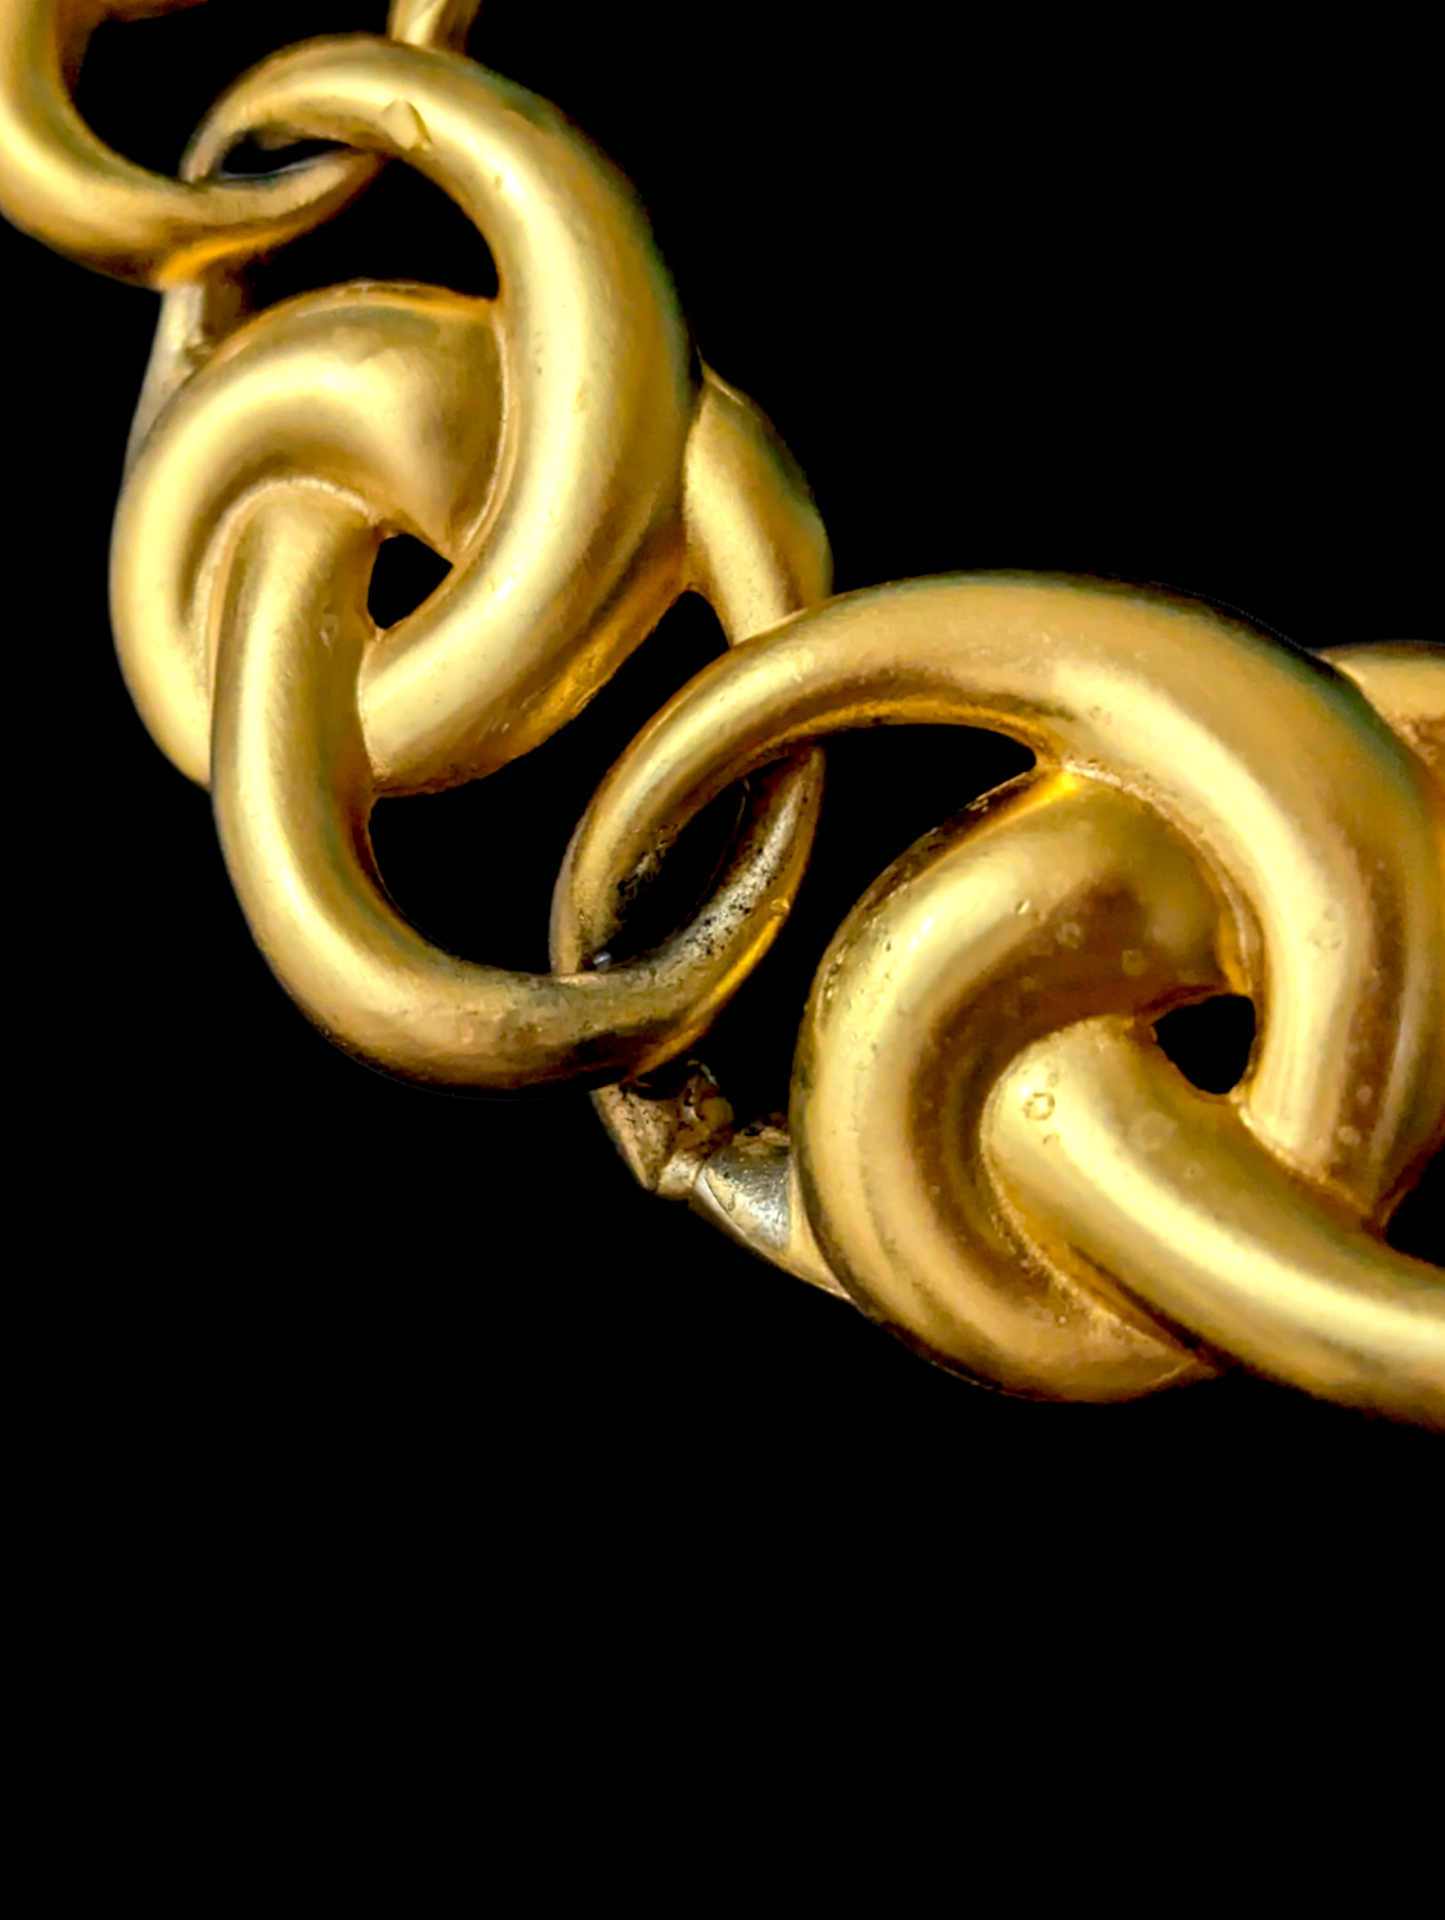 1980s Anne Klein Infinity Love Knot Design Necklace